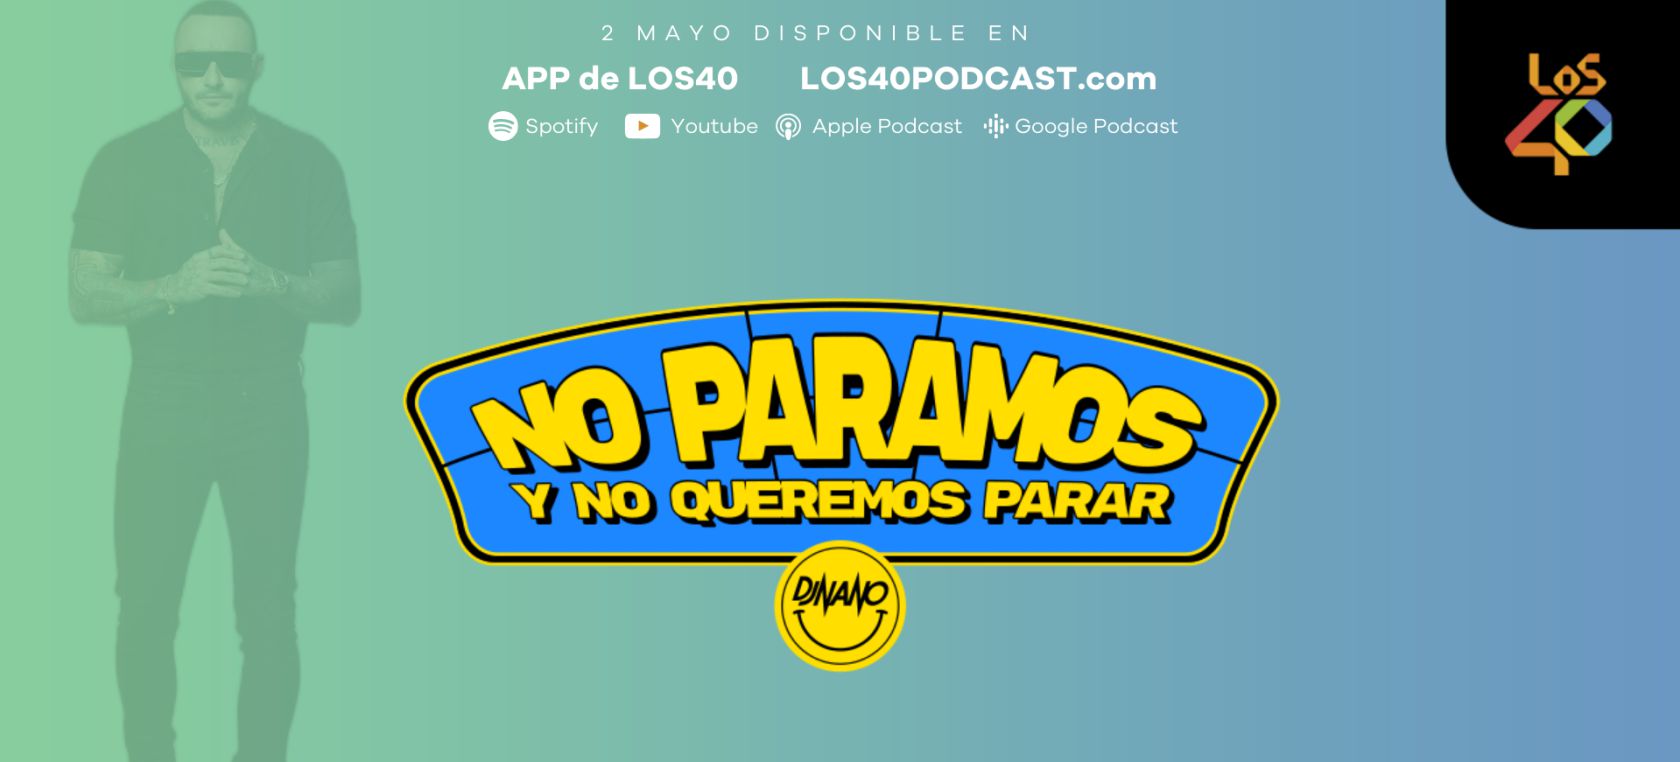 Dj Nano estrena el podcast ‘No Paramos y no queremos parar’ con conversaciones poderosas e inspiradoras